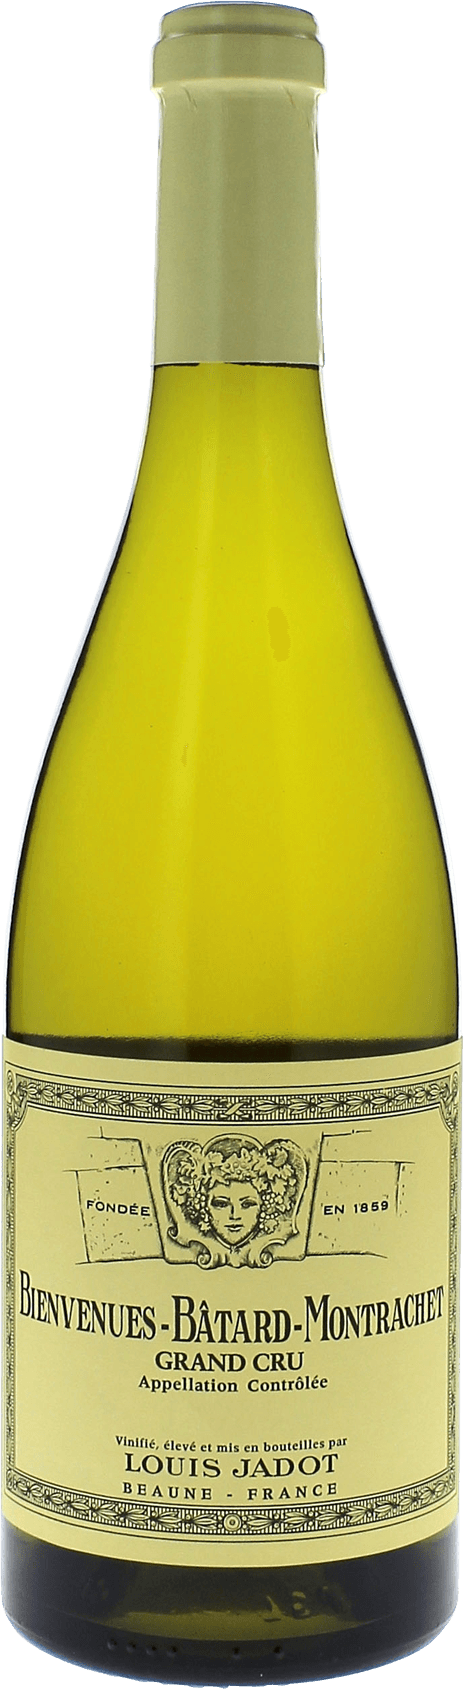 Bienvenue batard montrachet grand cru 2017  Jadot Louis, Bourgogne blanc